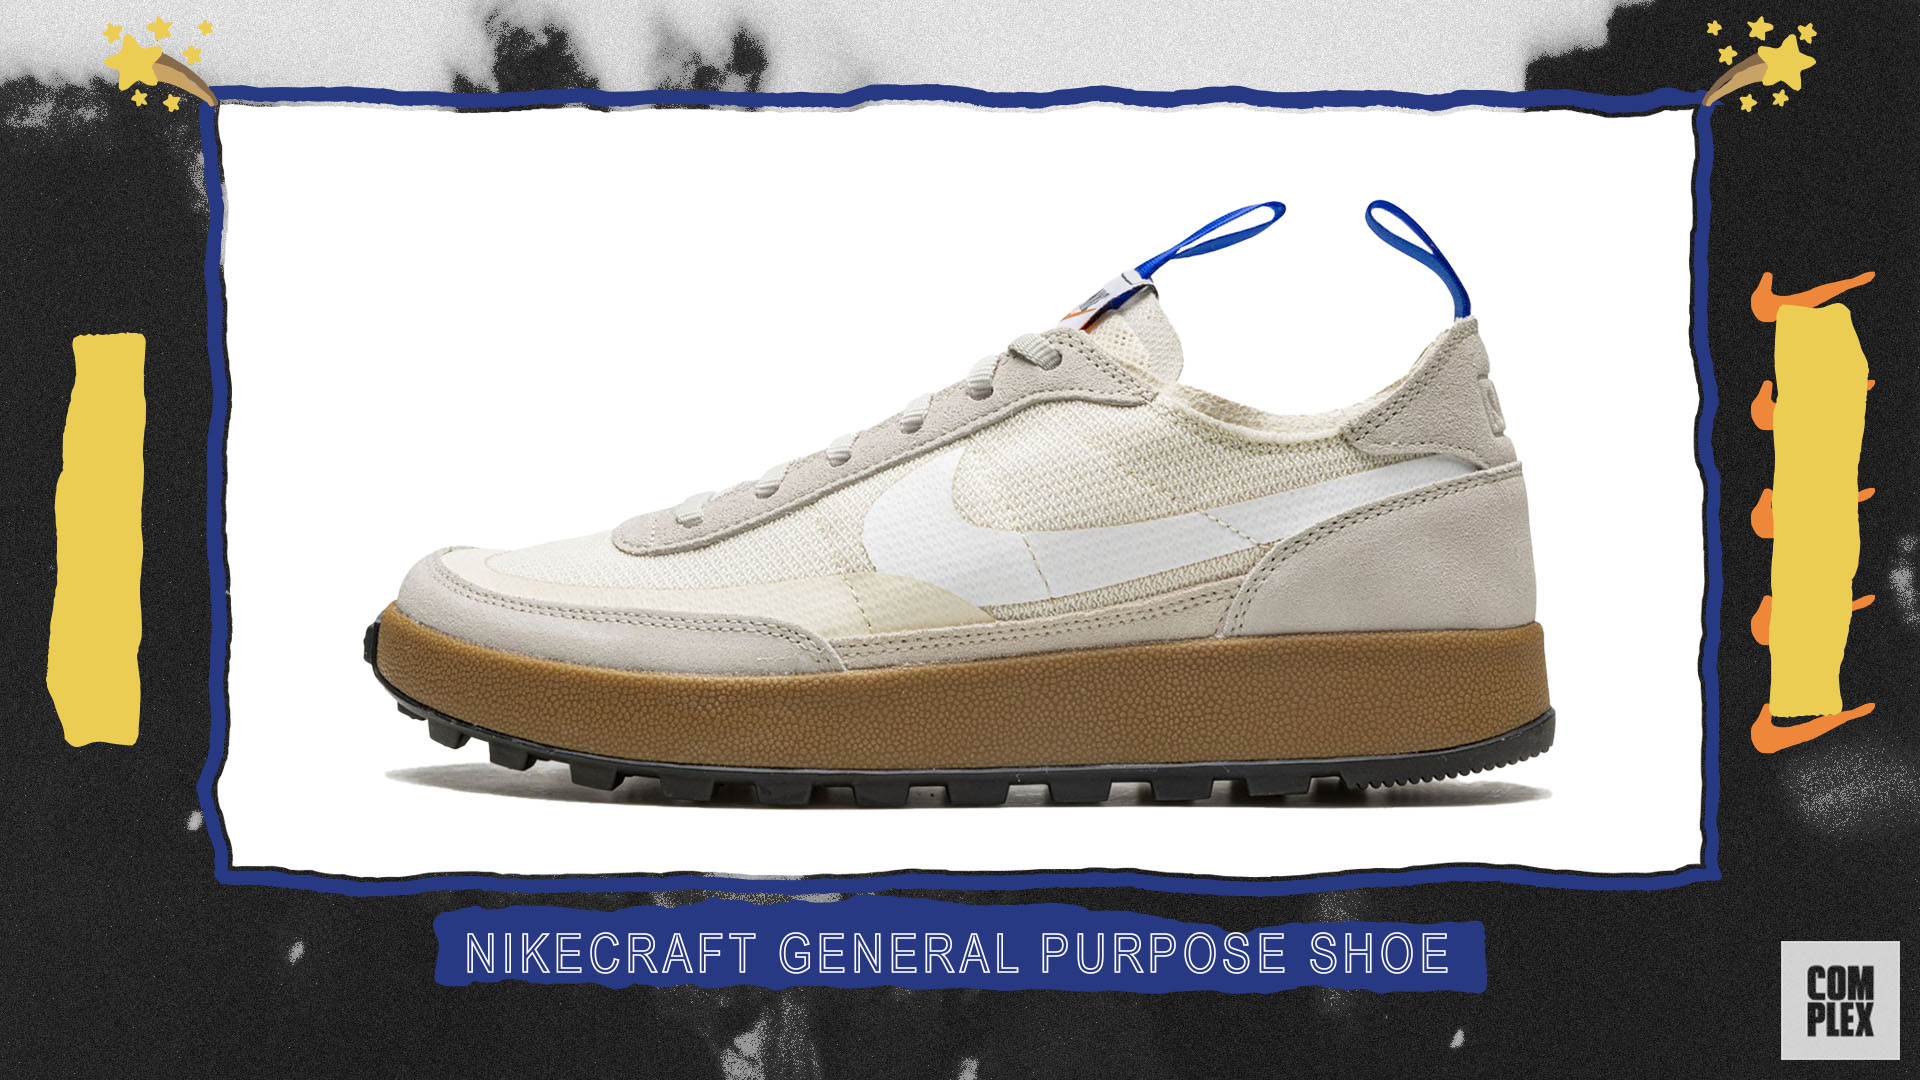 Best New Sneaker Designs 2022 Nikecraft General Purpose Shoe